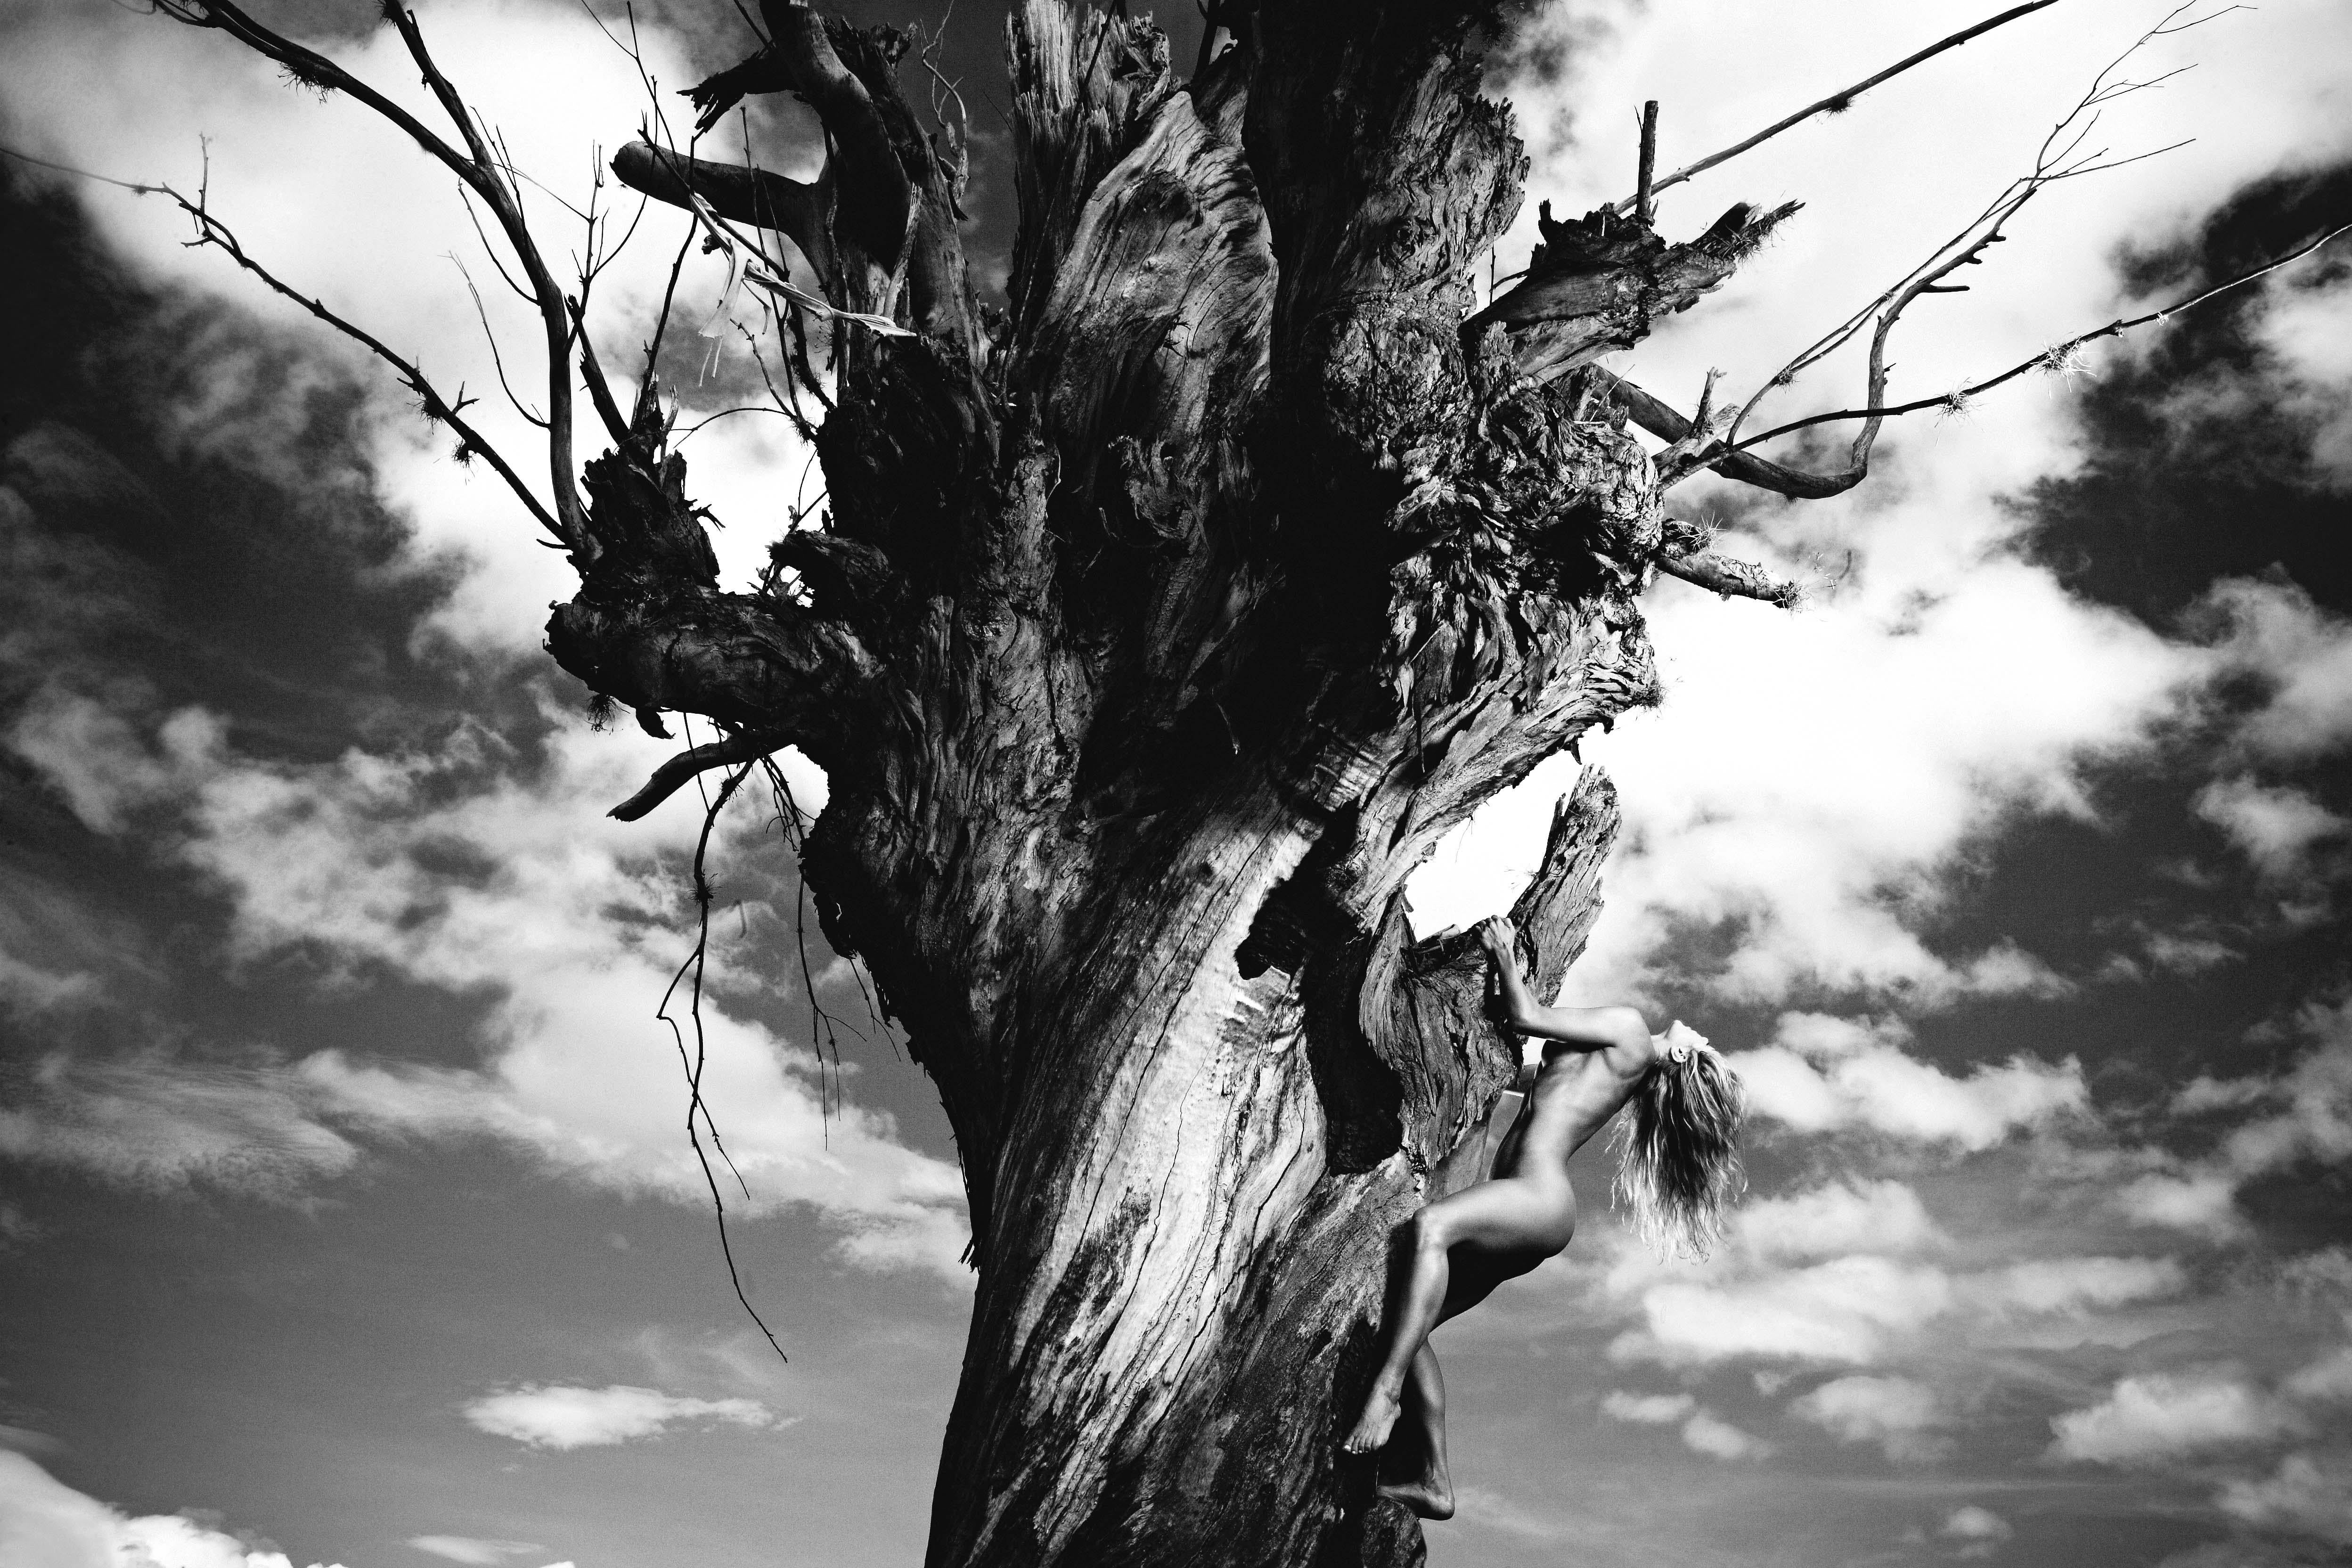 Mauricio Velez Nude Photograph - Half Angels Half Demons #12, Nude on a tree. Black and White photograph